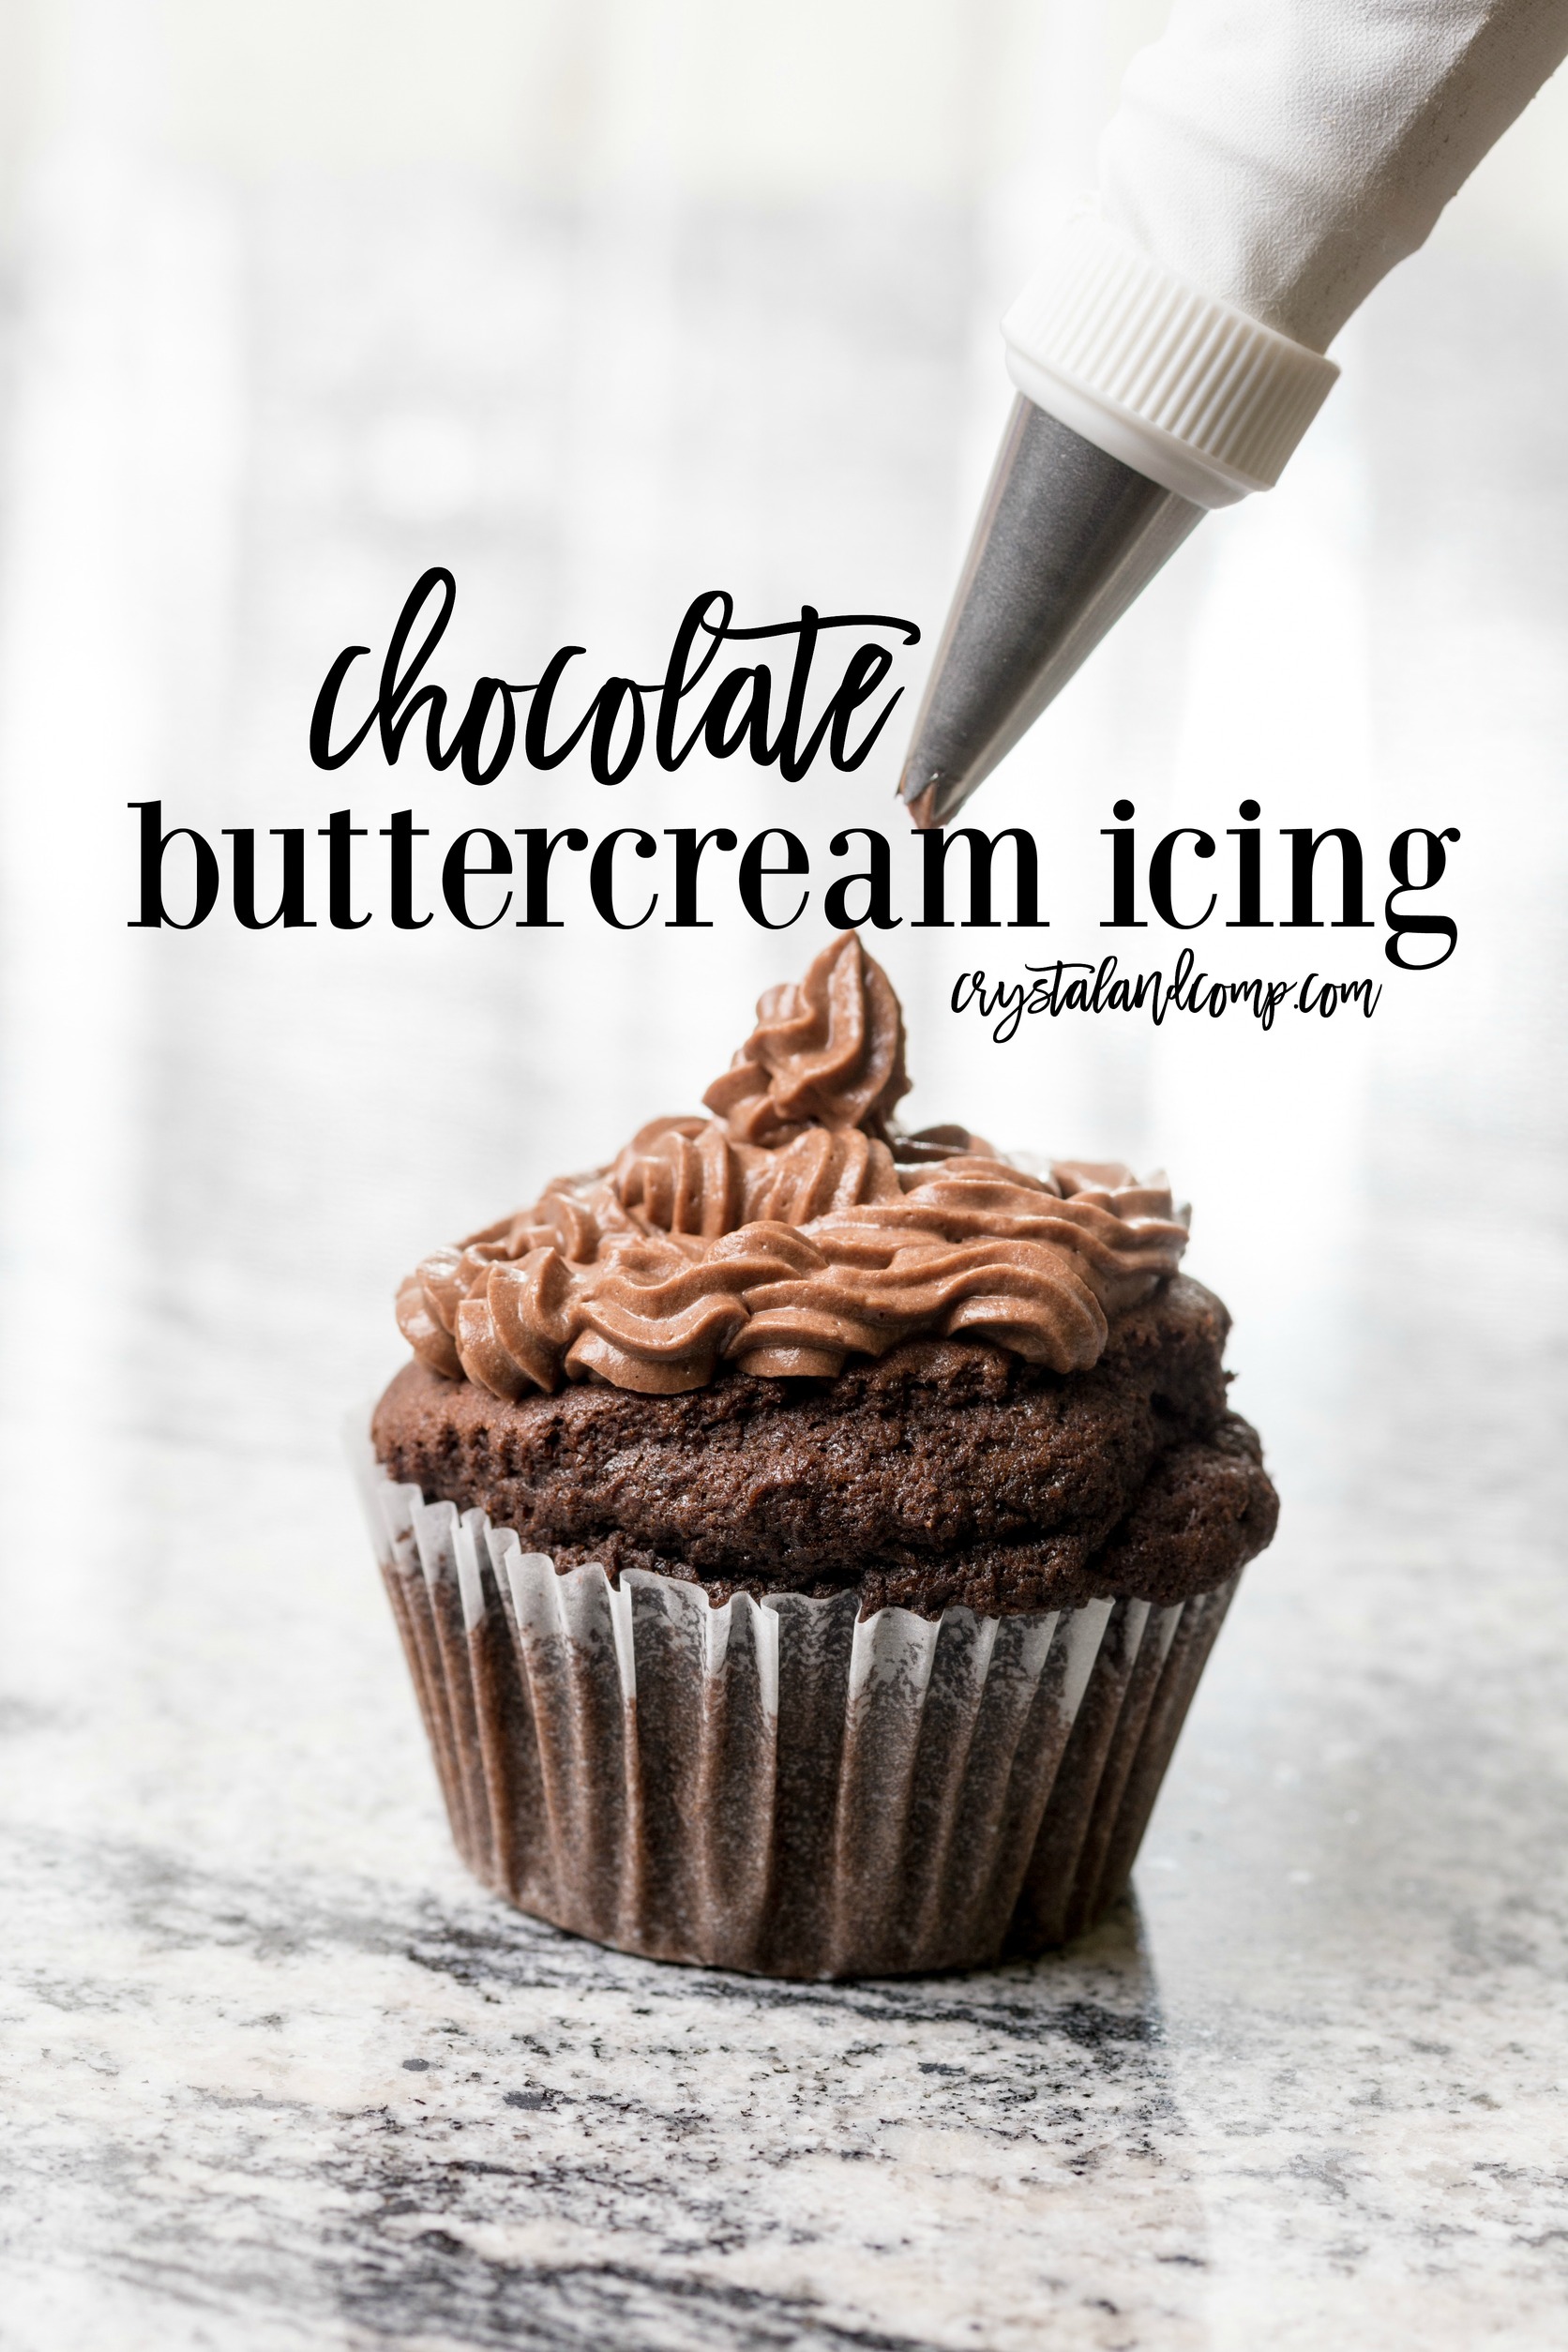 Chocolate Buttercream Icing Recipe